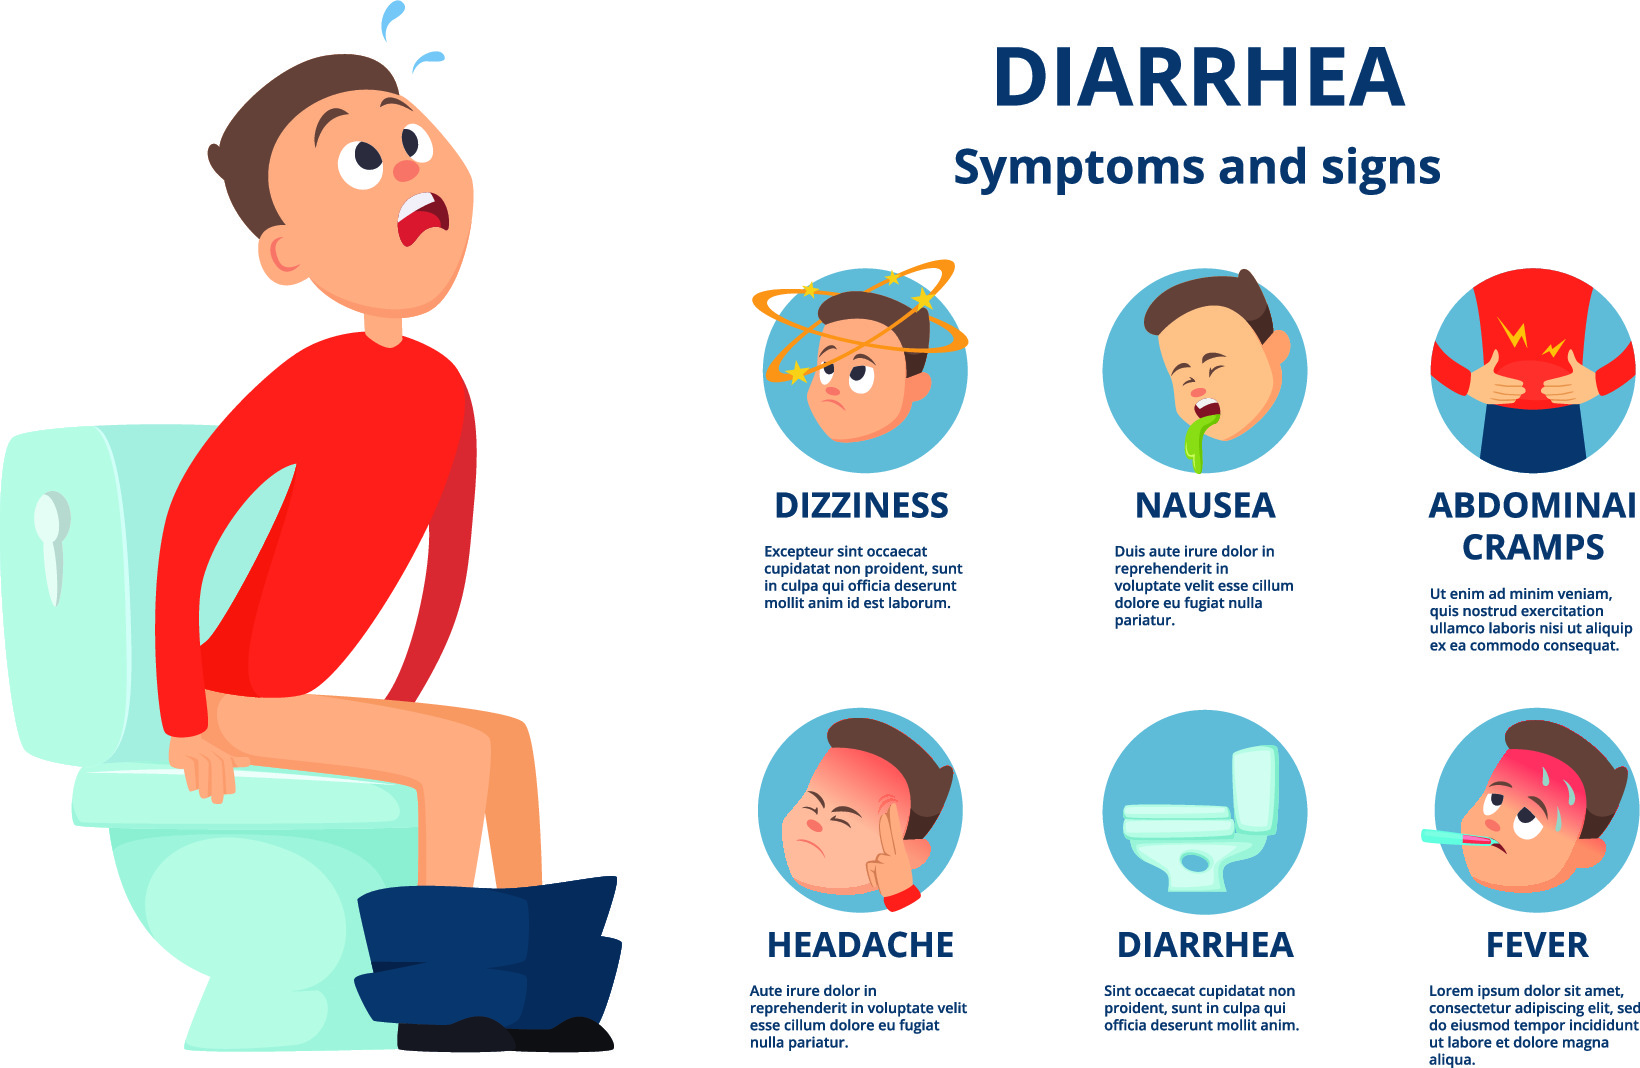 Diarrhea symptoms and signs